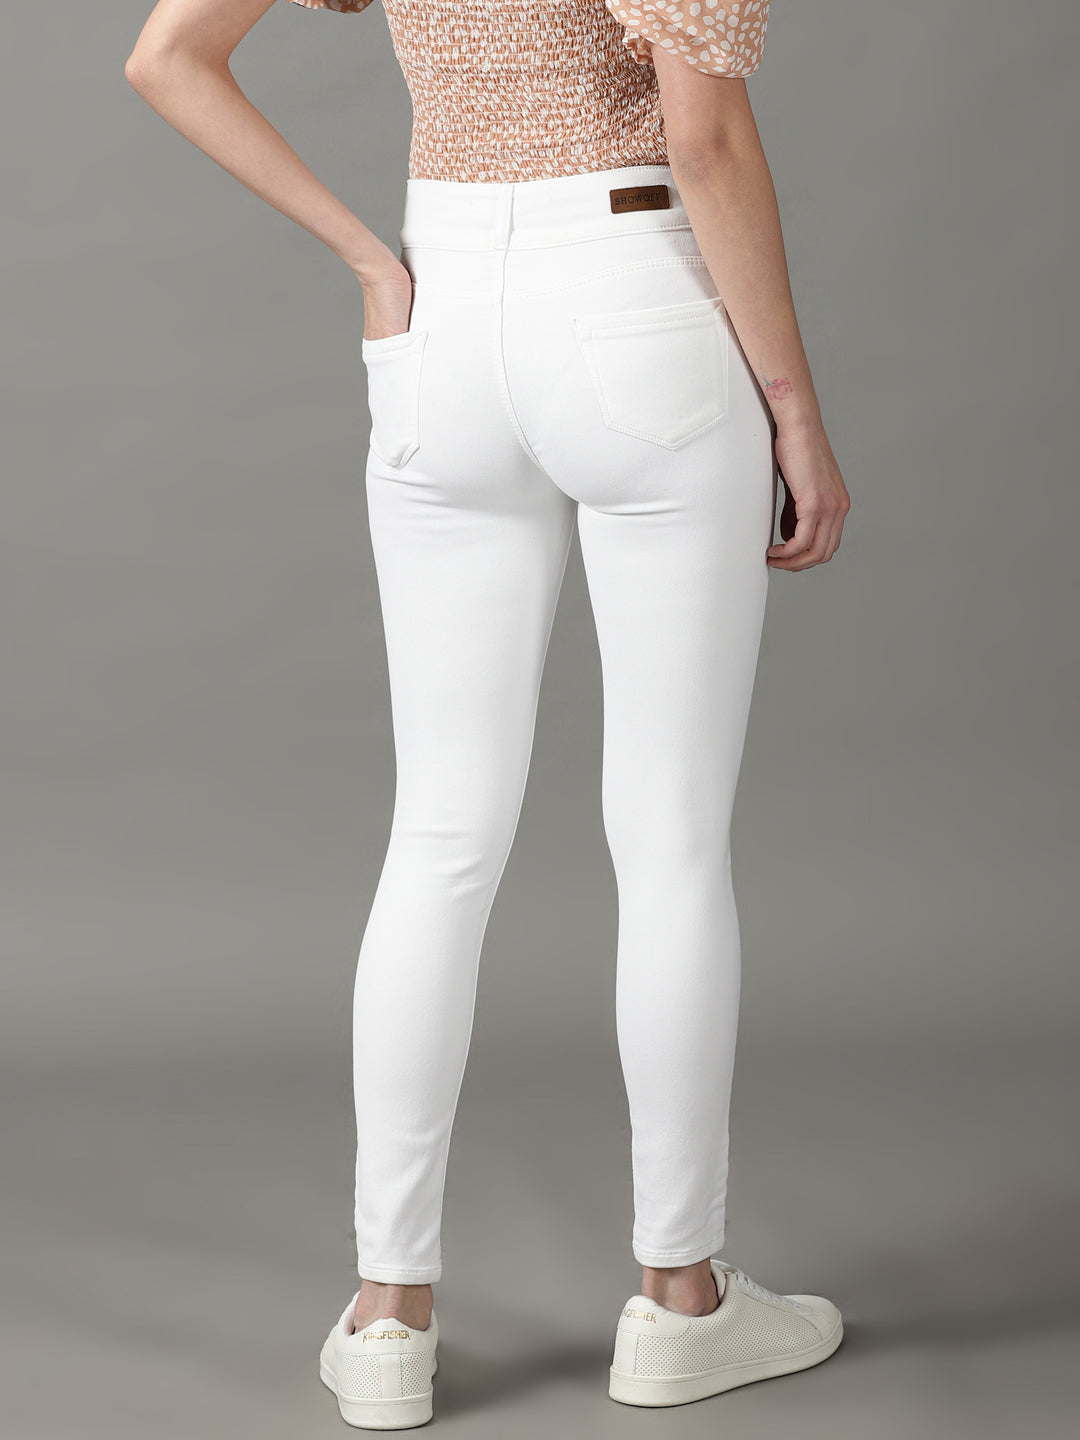 Women's White Solid Skinny Fit Denim Jeans